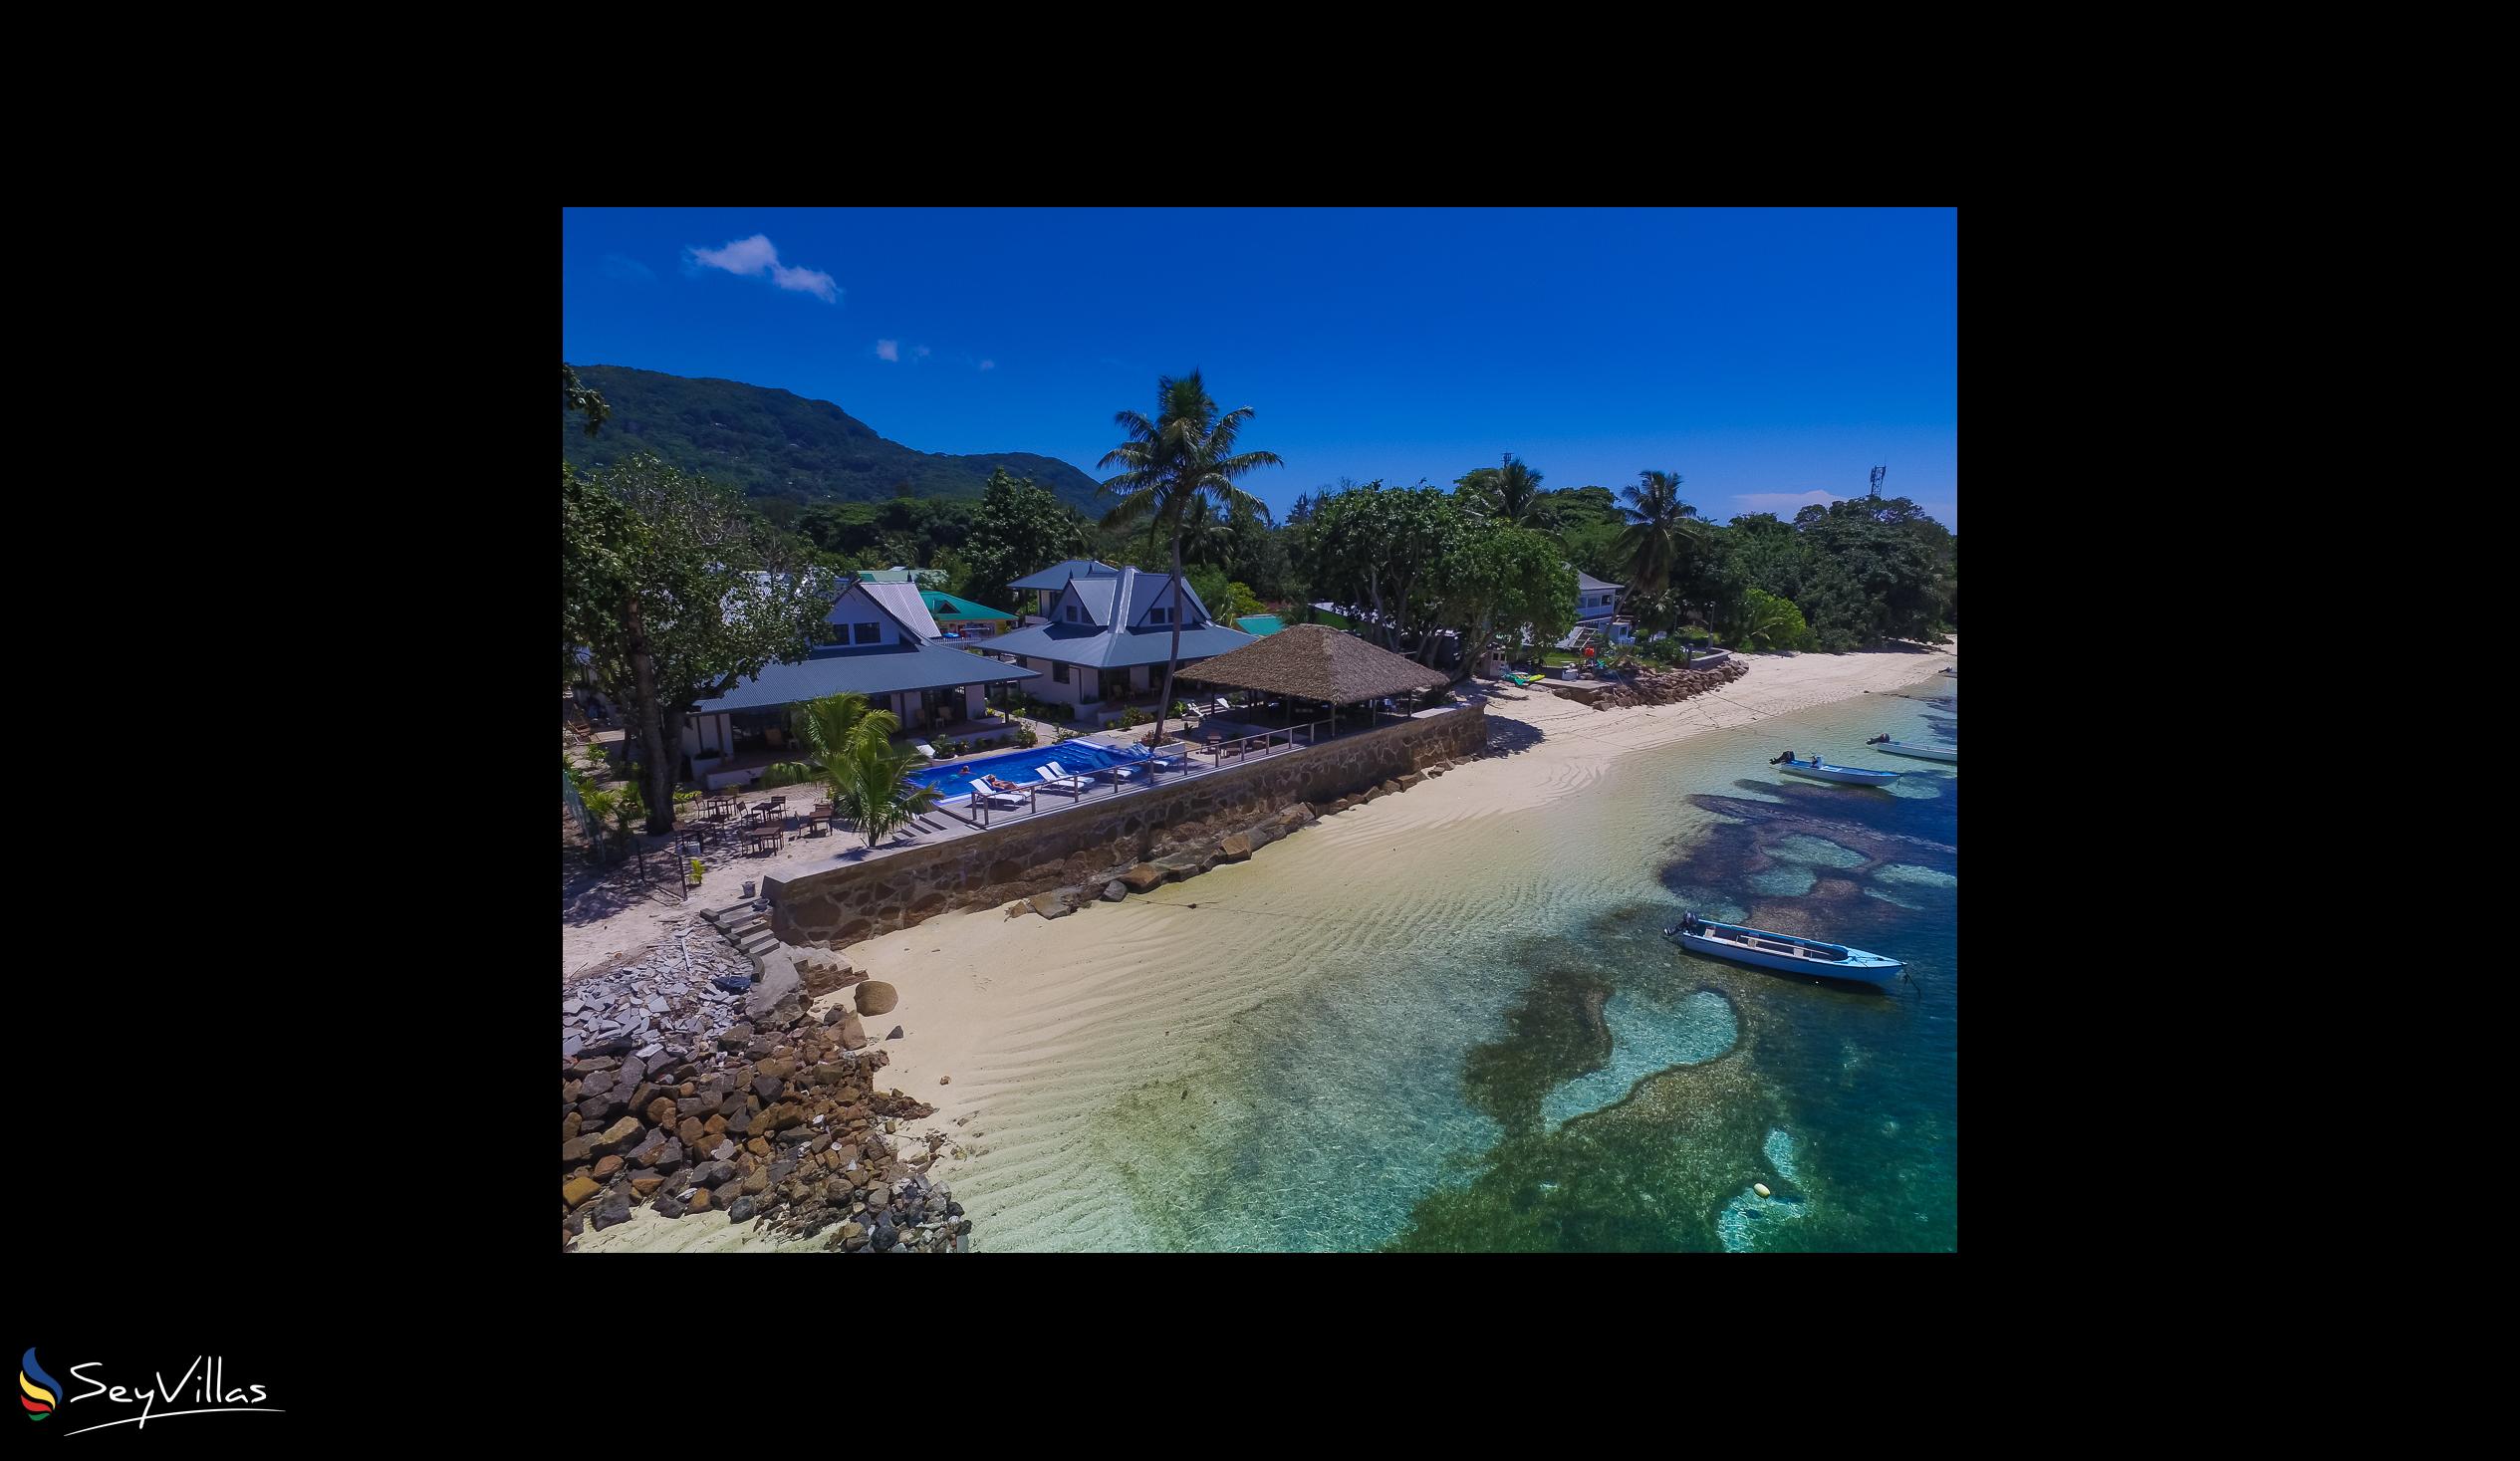 Photo 54: Le Nautique Luxury Waterfront Hotel - Outdoor area - La Digue (Seychelles)